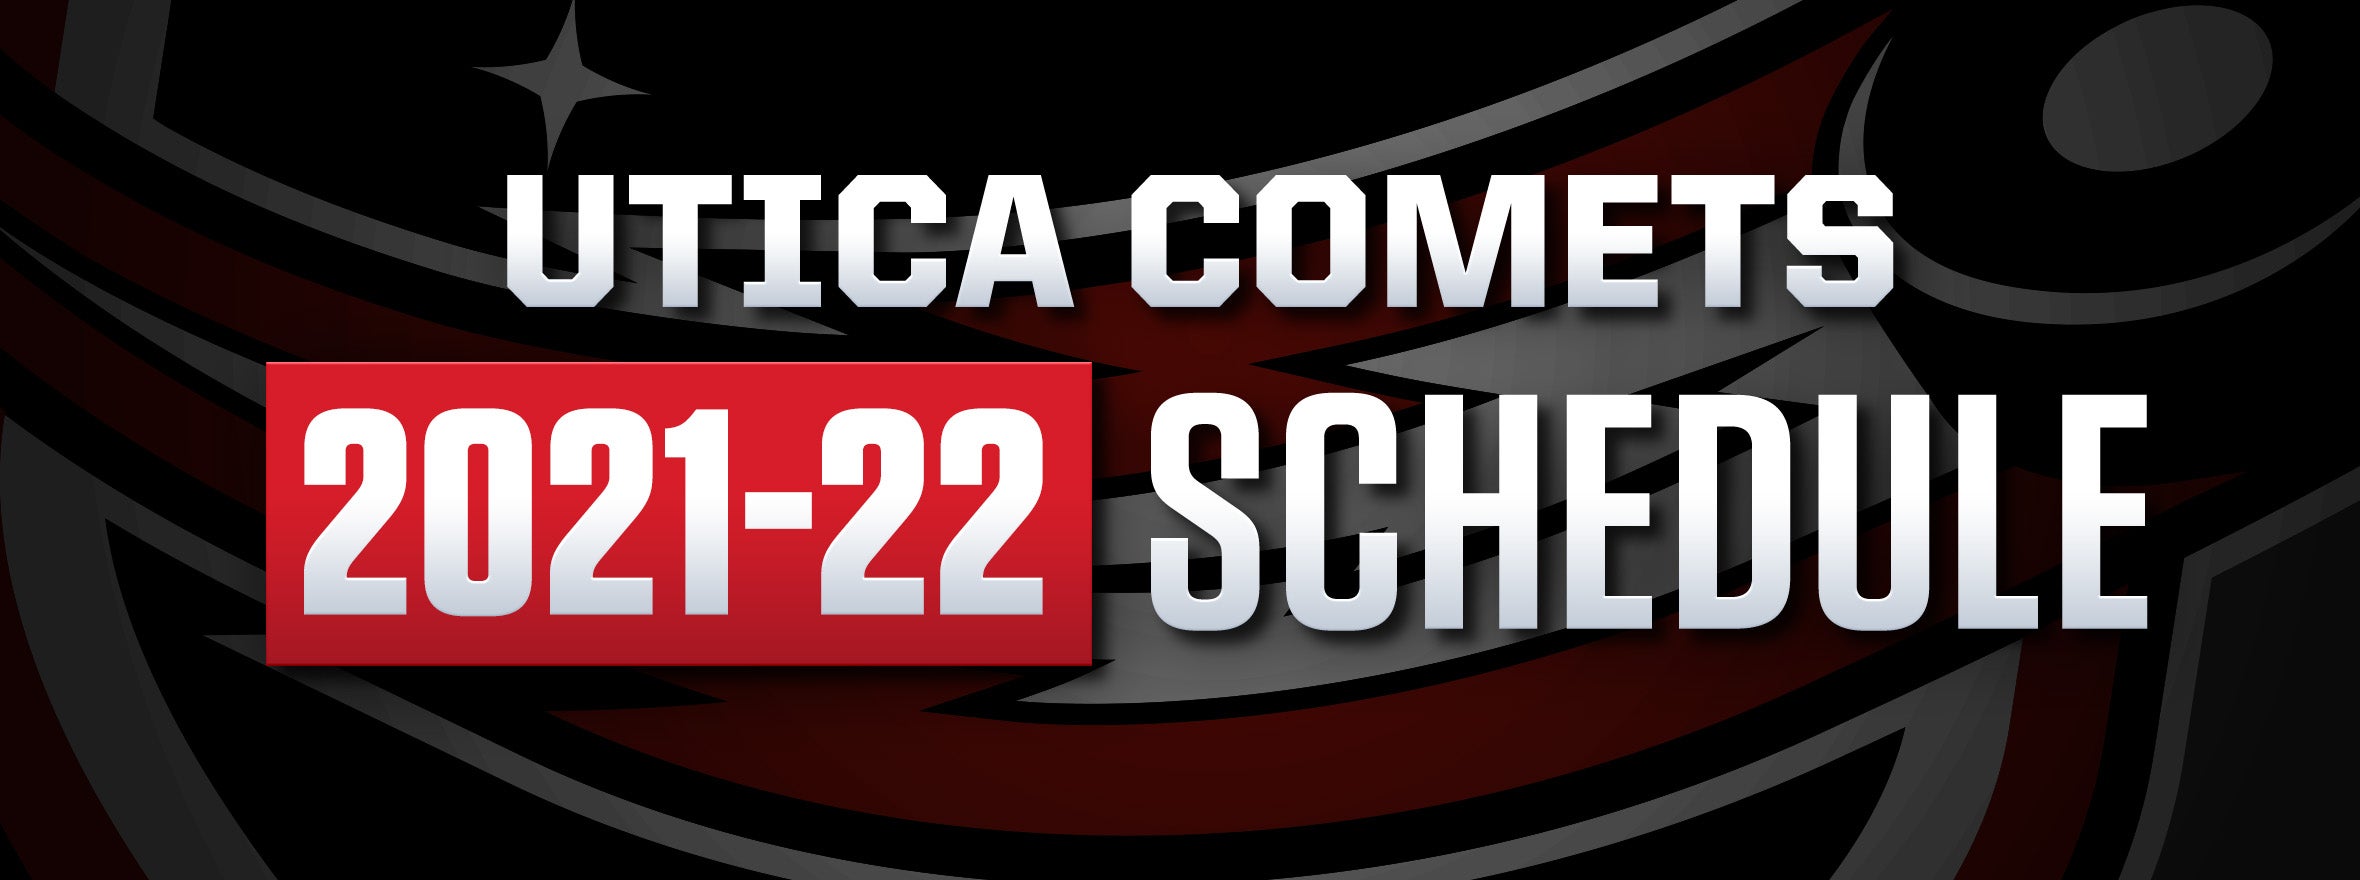 UTICA COMETS ANNOUNCE 2021-22 SCHEDULE | Utica Comets Official Website